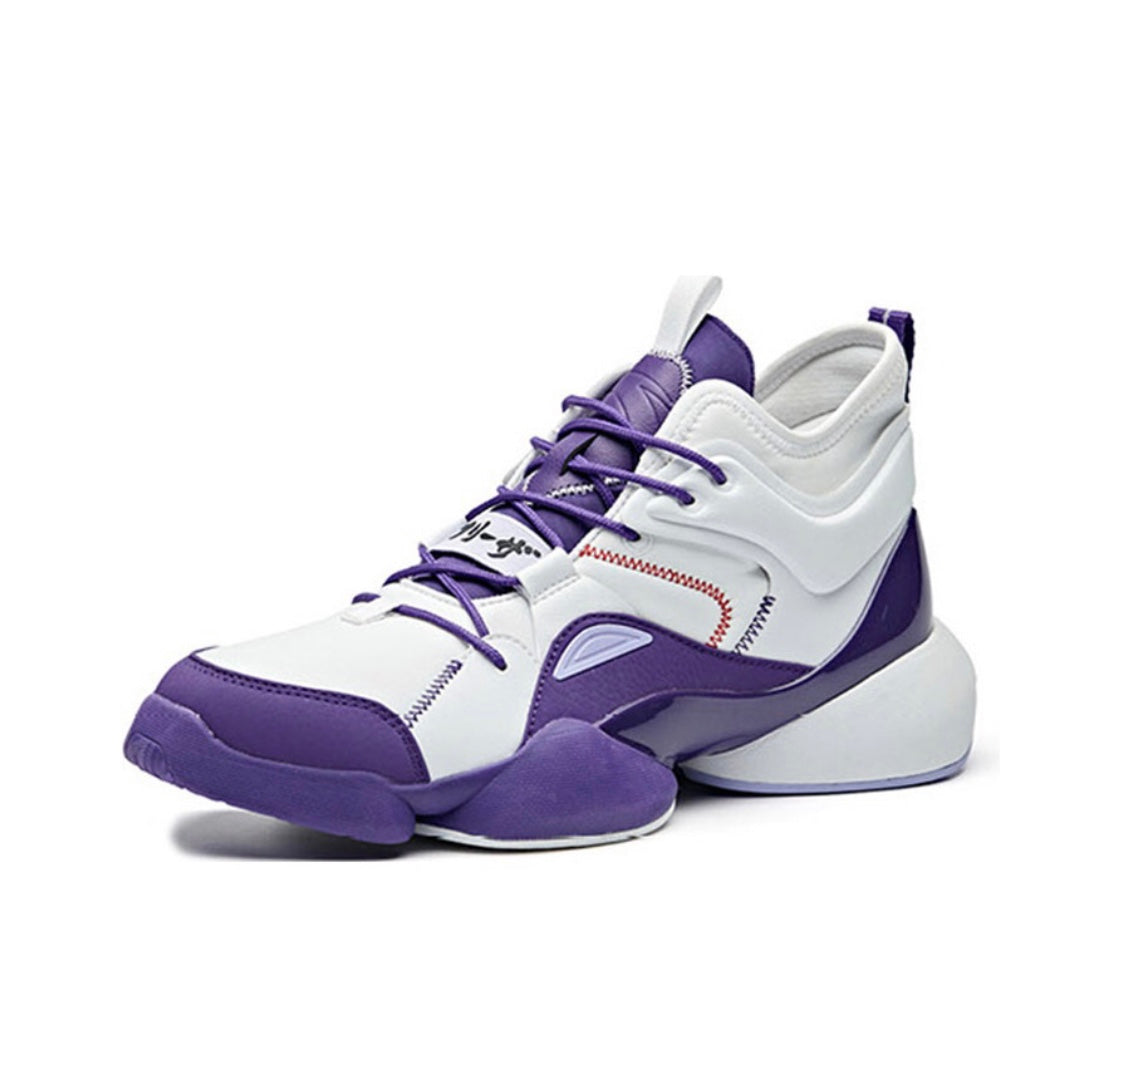 Anta Men's x Dragon Ball Super "Frieza" Basketball Shoes